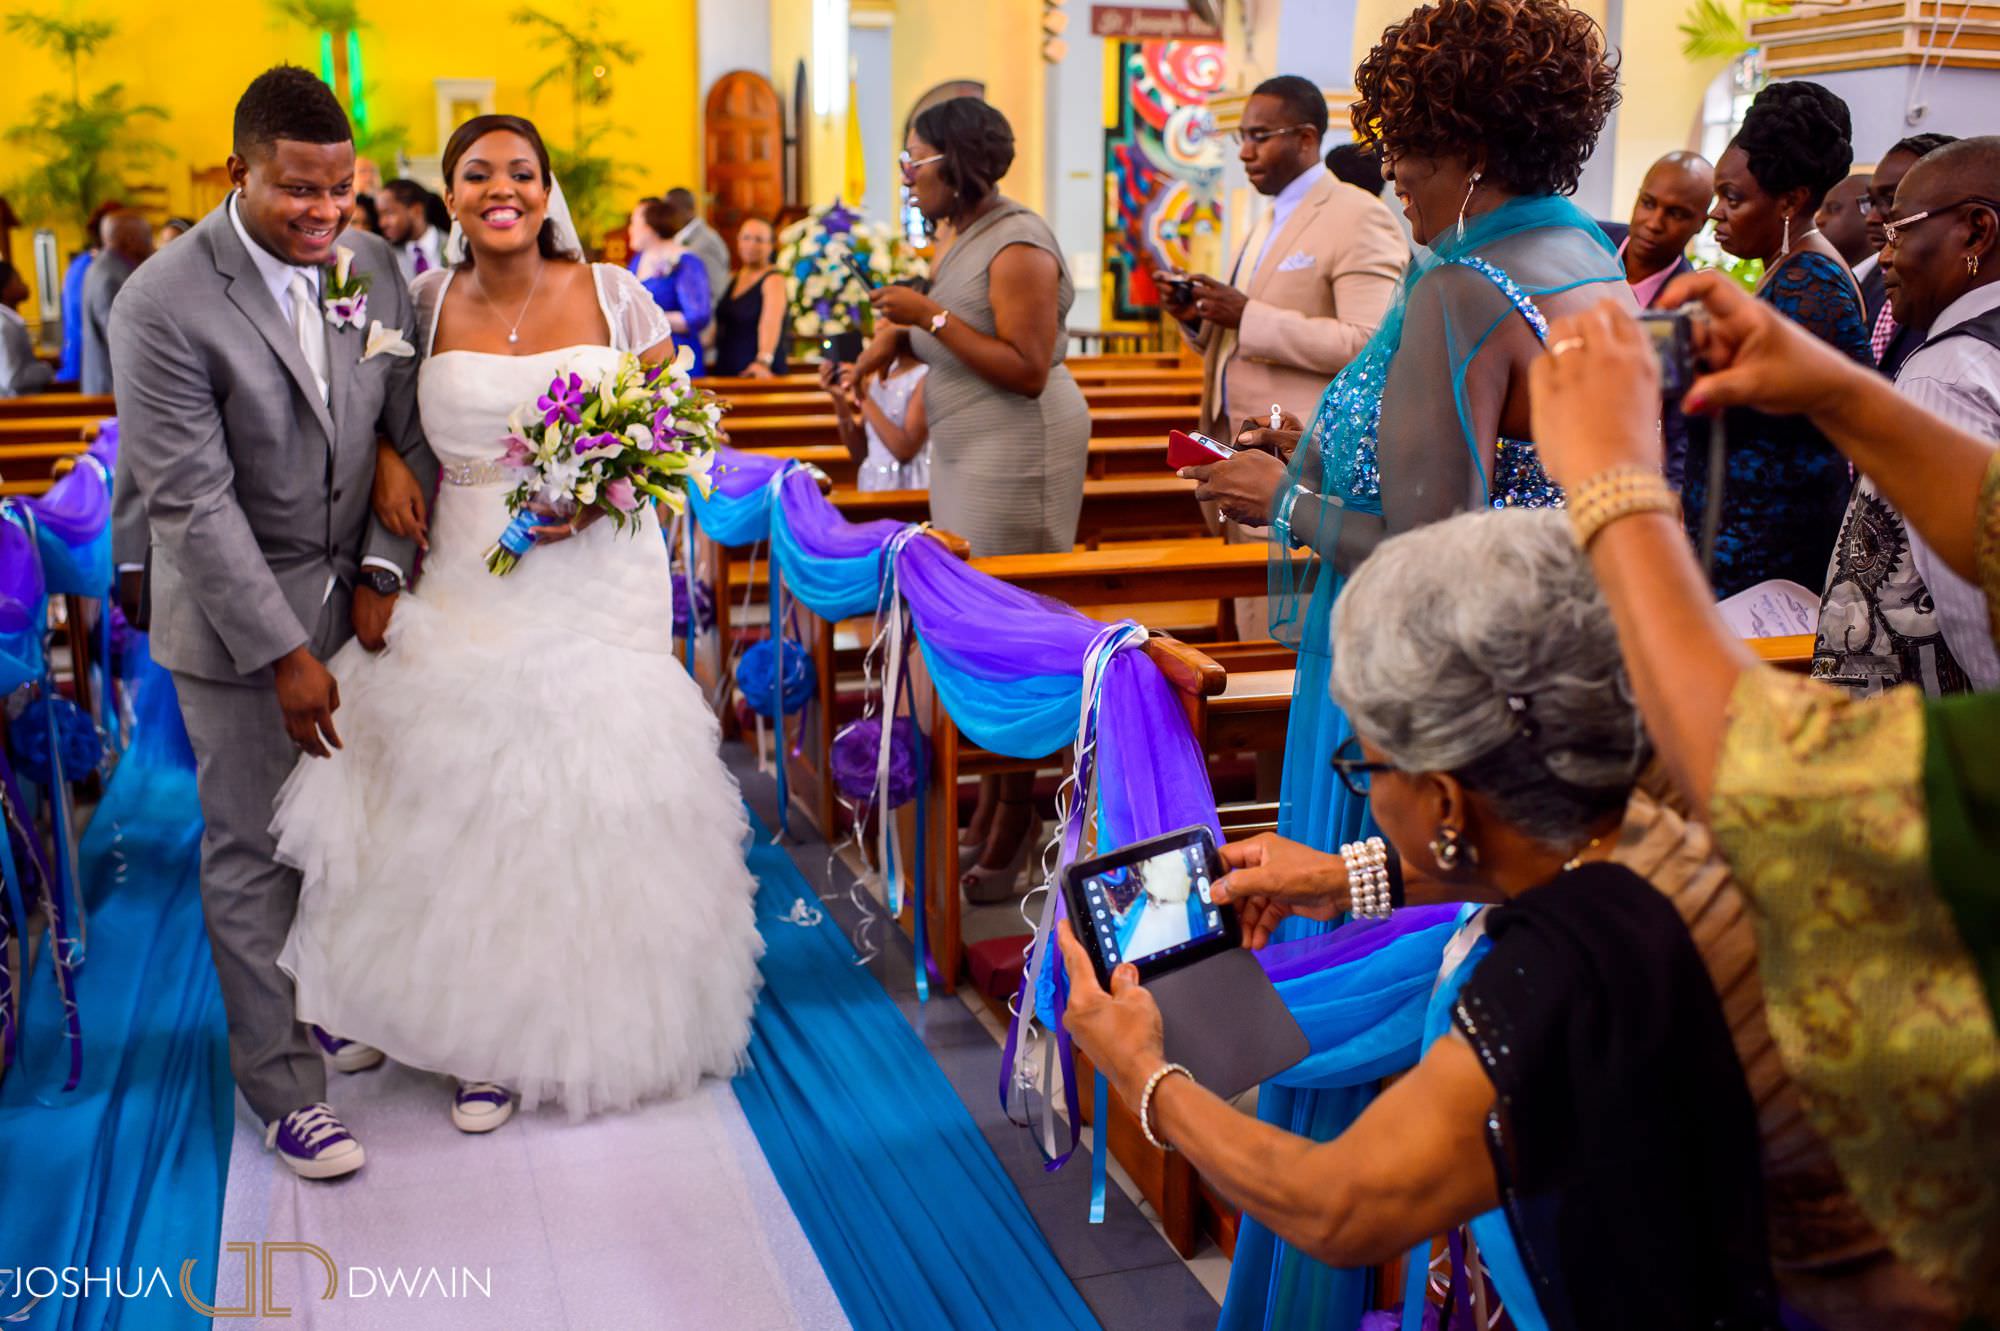 Shana & Kalesi's Wedding in San Fernando Trinidad at Nia Valley